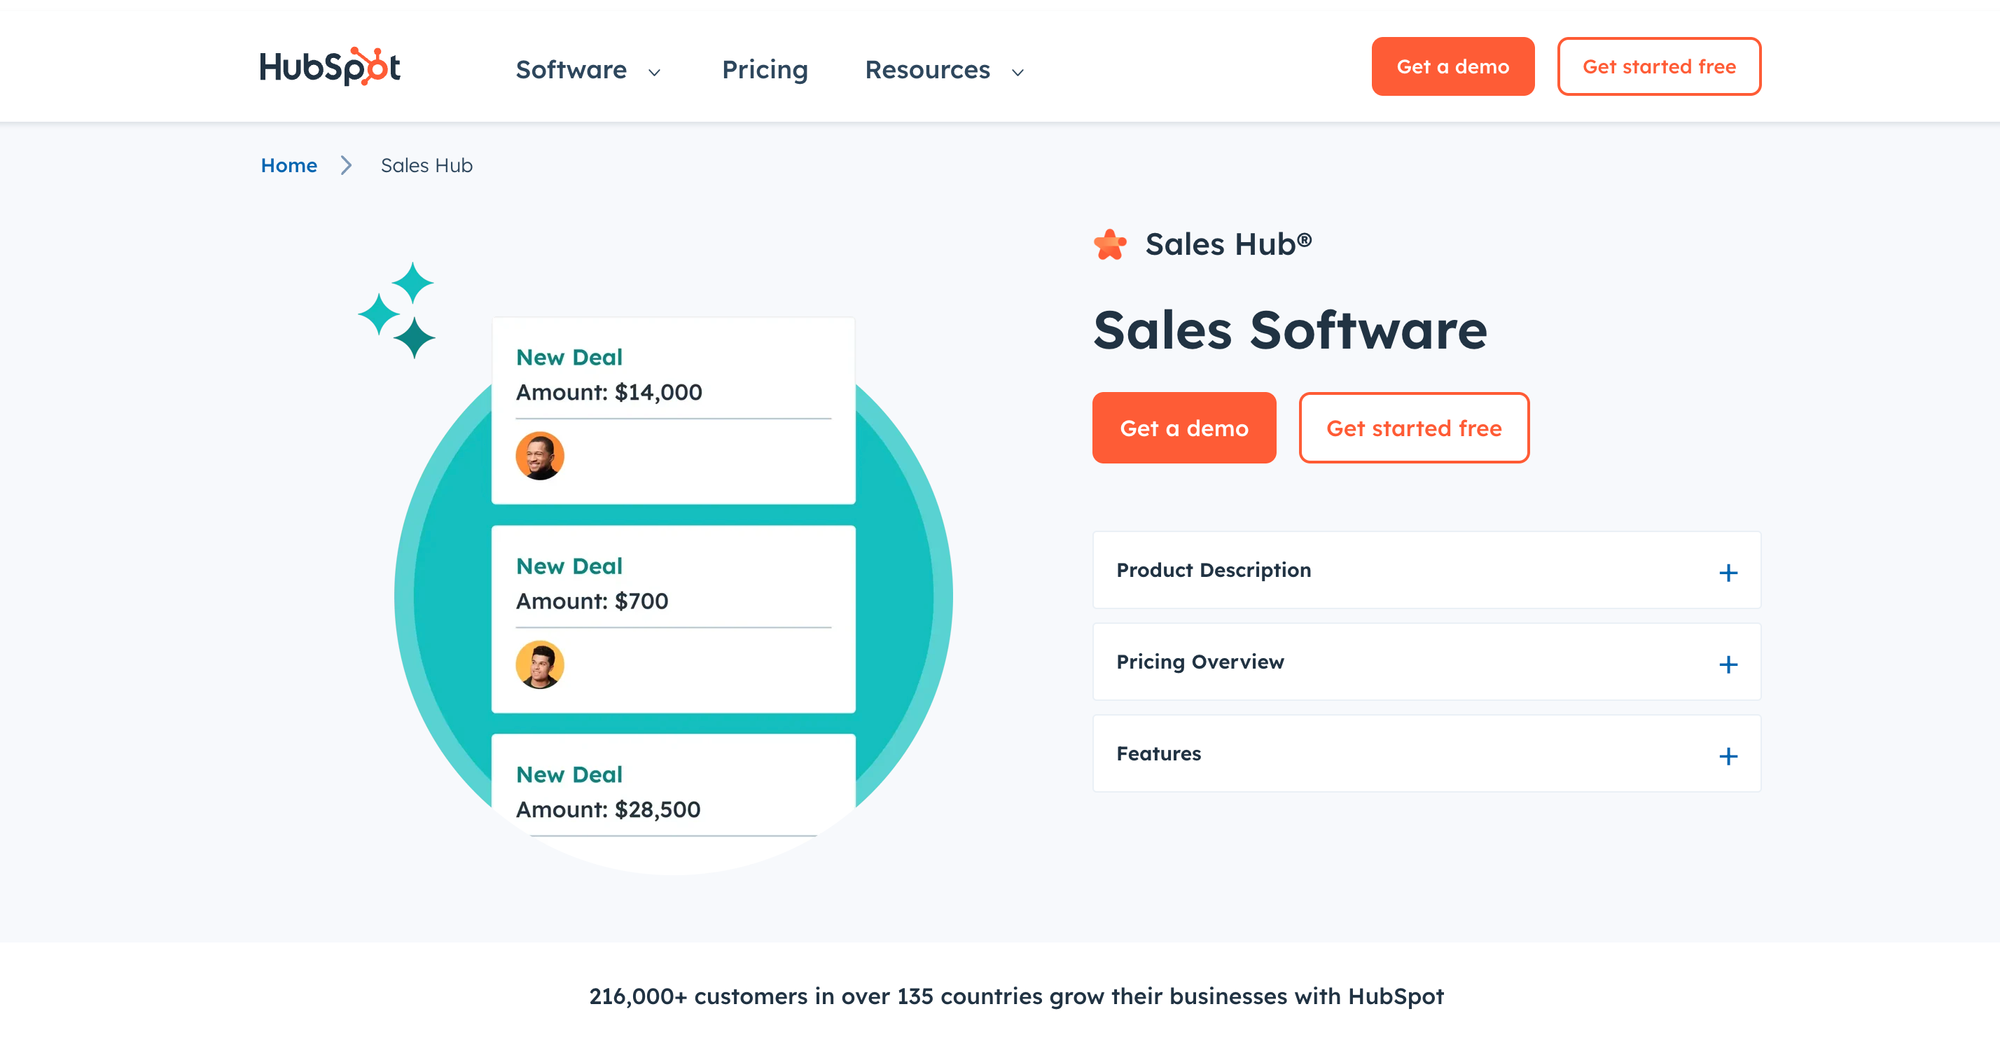 HubSpot Sales Hub